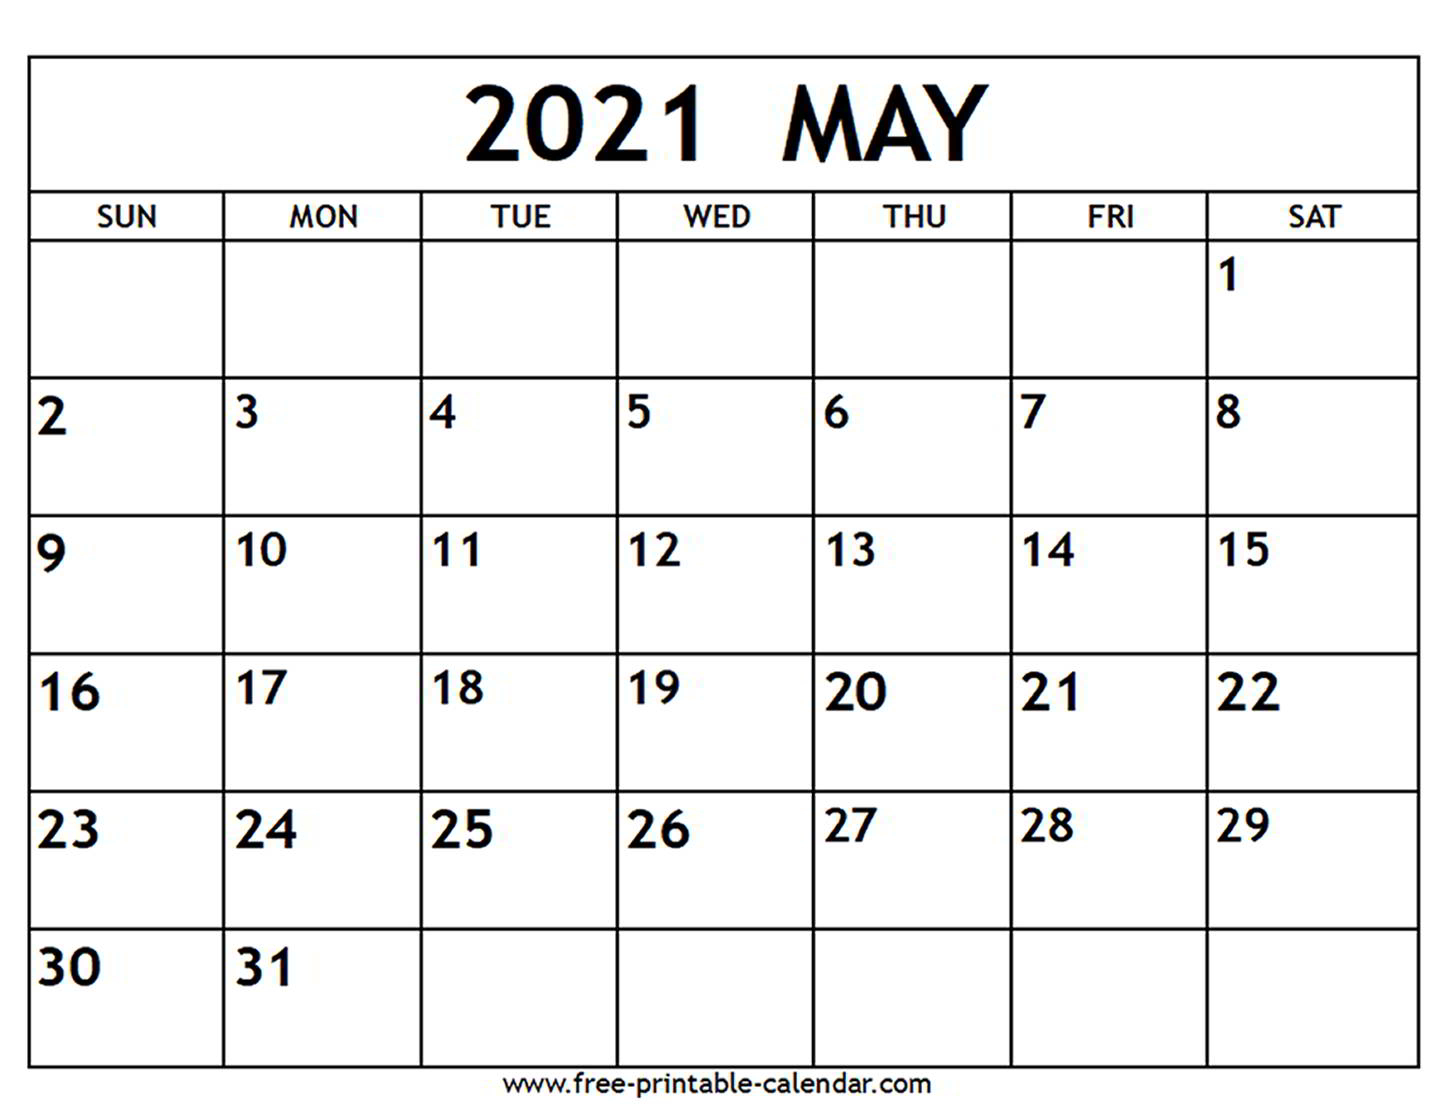 May 2021 Calendar - Free-Printable-Calendar